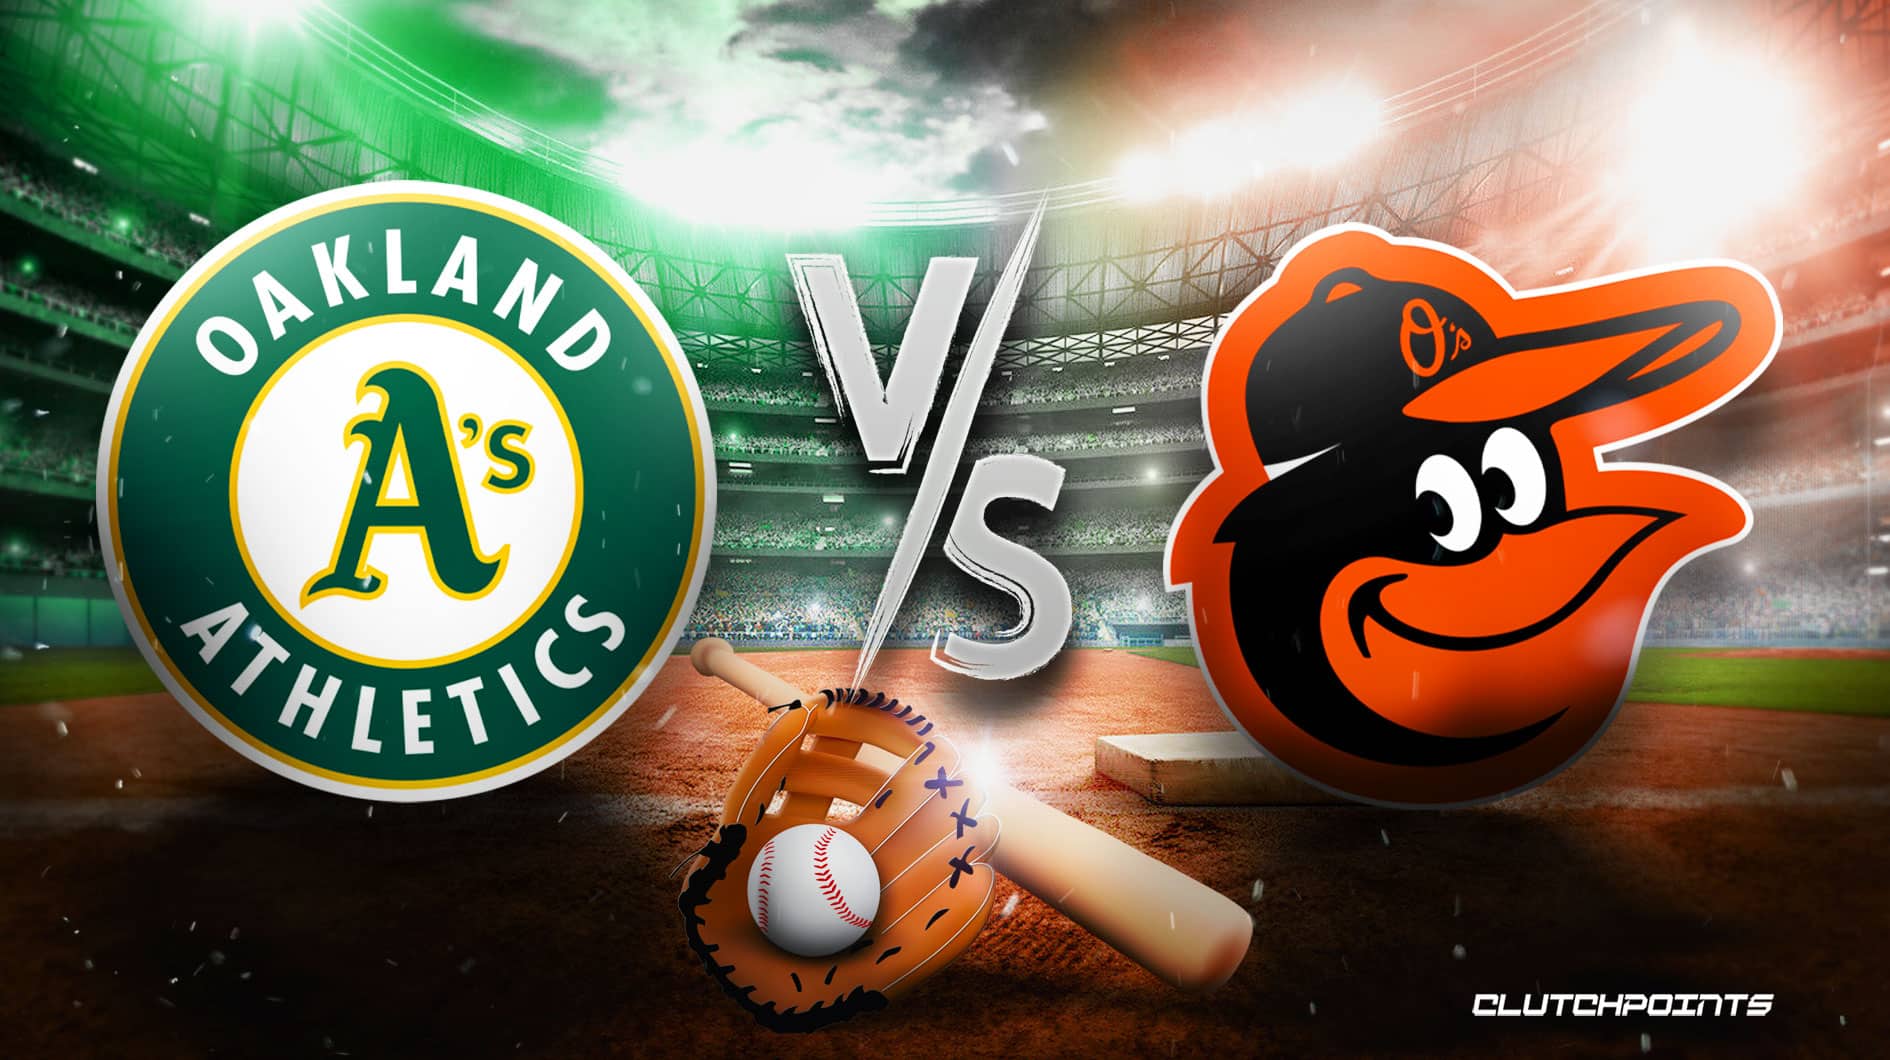 Baltimore Orioles vs Oakland Athletics series preview